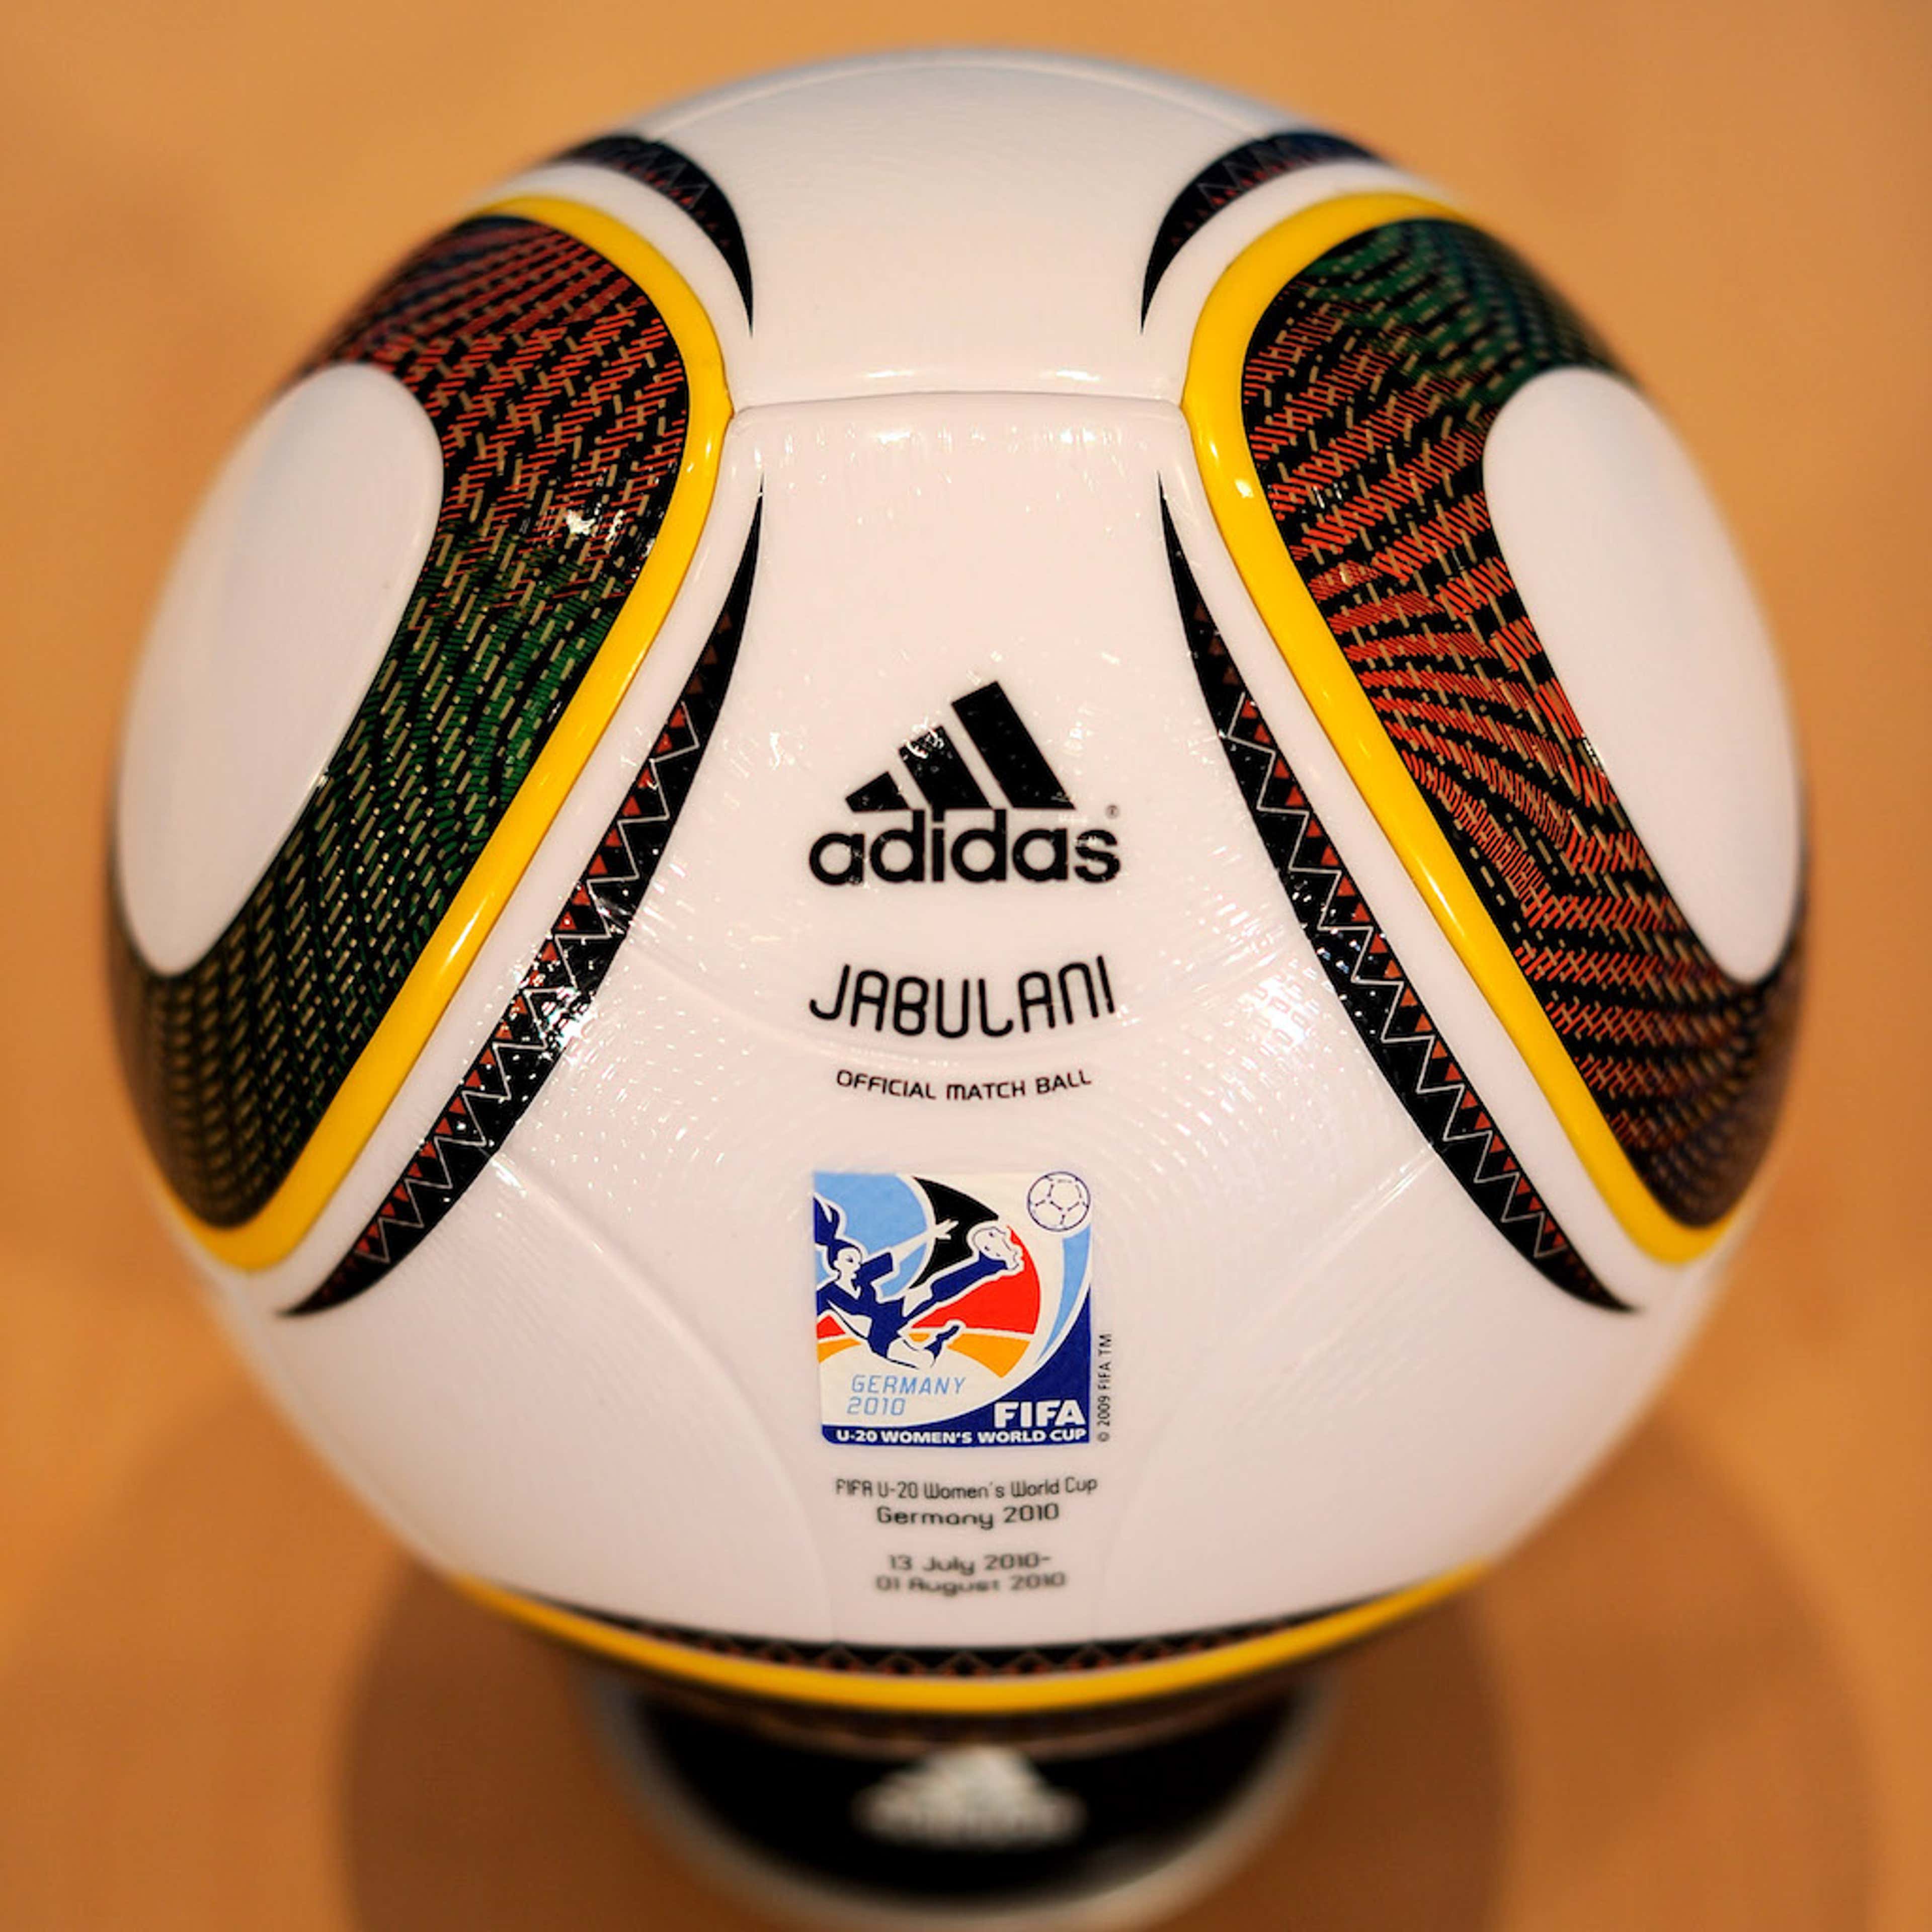 World Cup balls: Al Rihla, Tango, Jabulani & the complete history